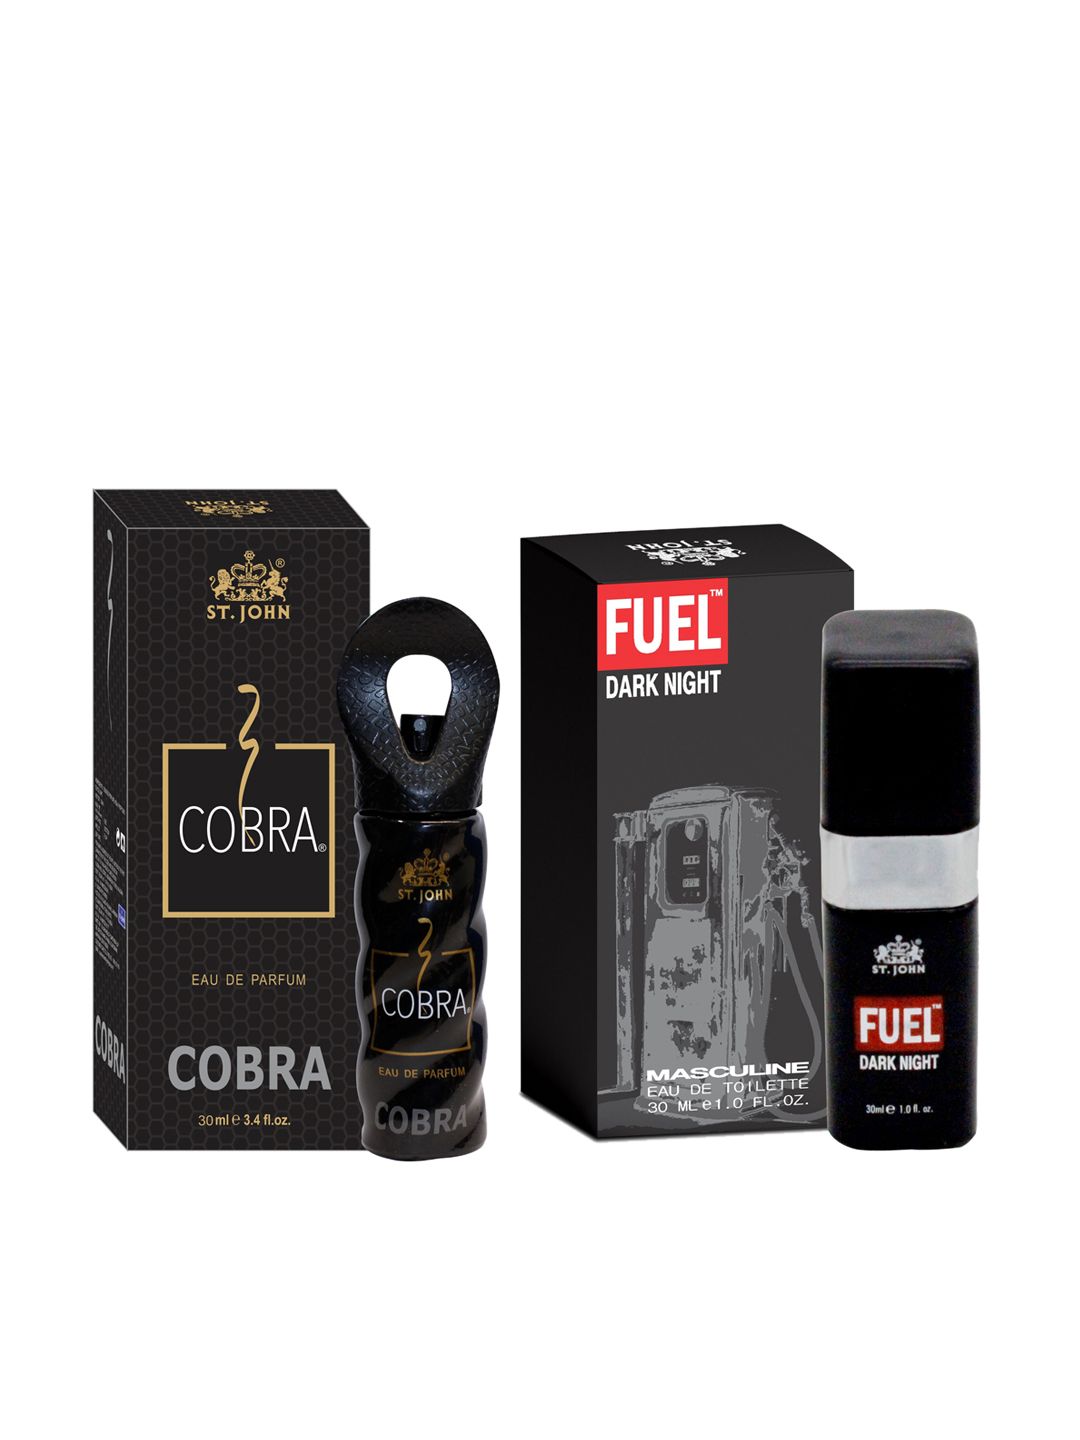 St. John Set of Cobra & Fuel Dark Night Masculine Eau De Parfum - 30 ml Each Price in India